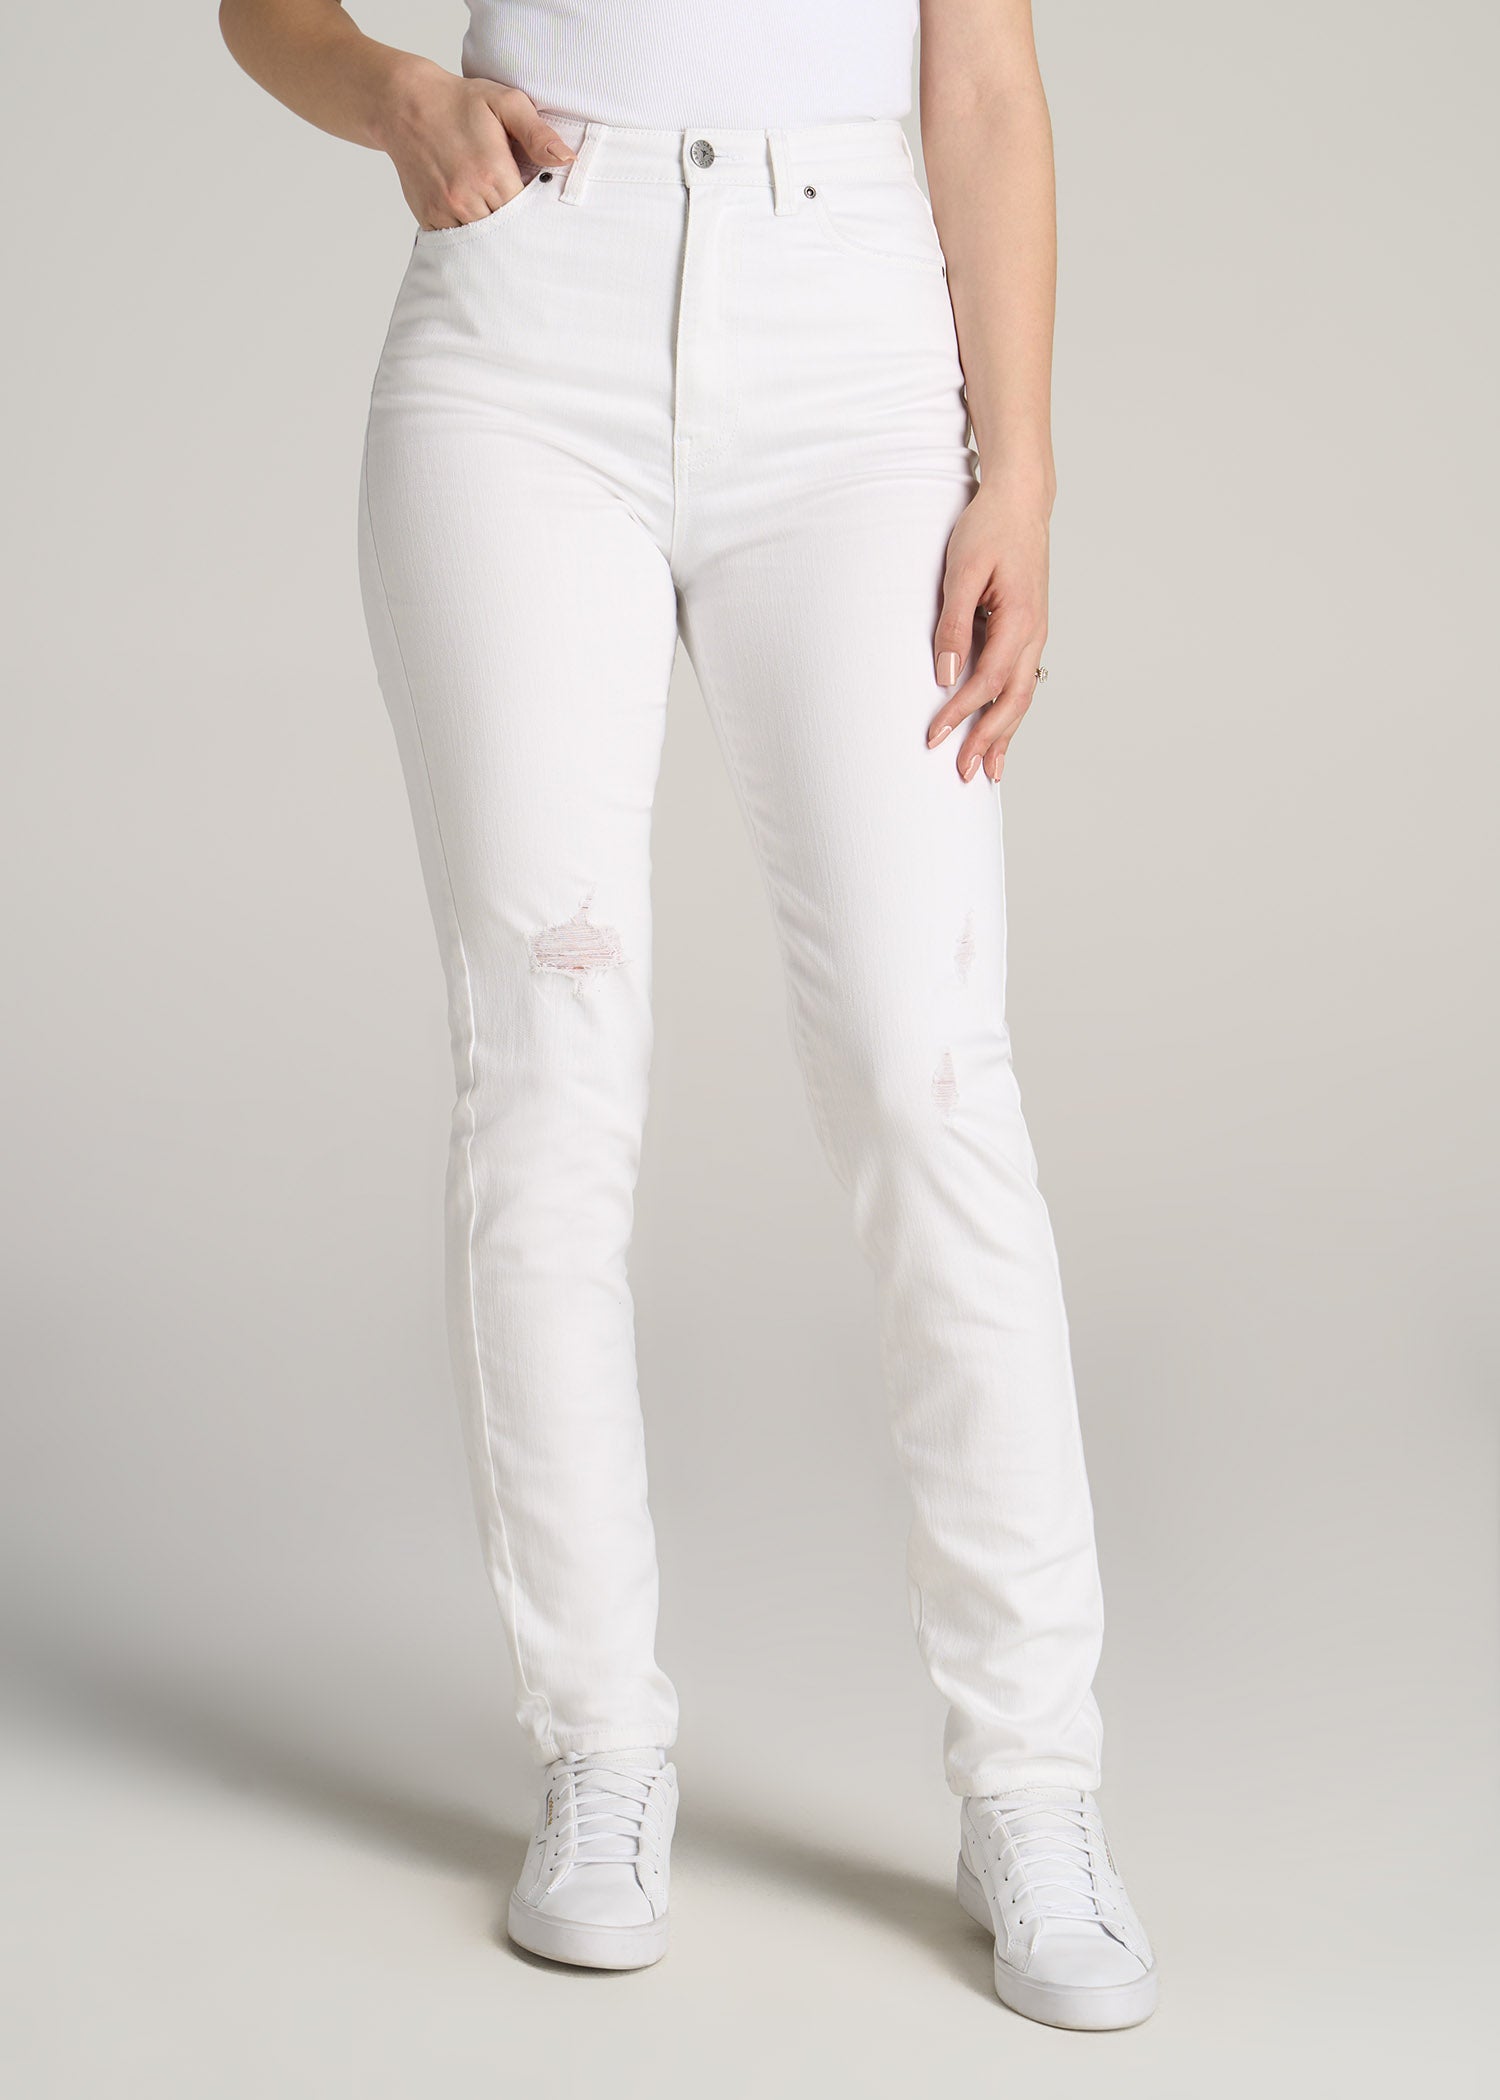 kom Kano kompas Women's Tall White Jeans | Lola Ultra High Rise Slim Jeans – American Tall